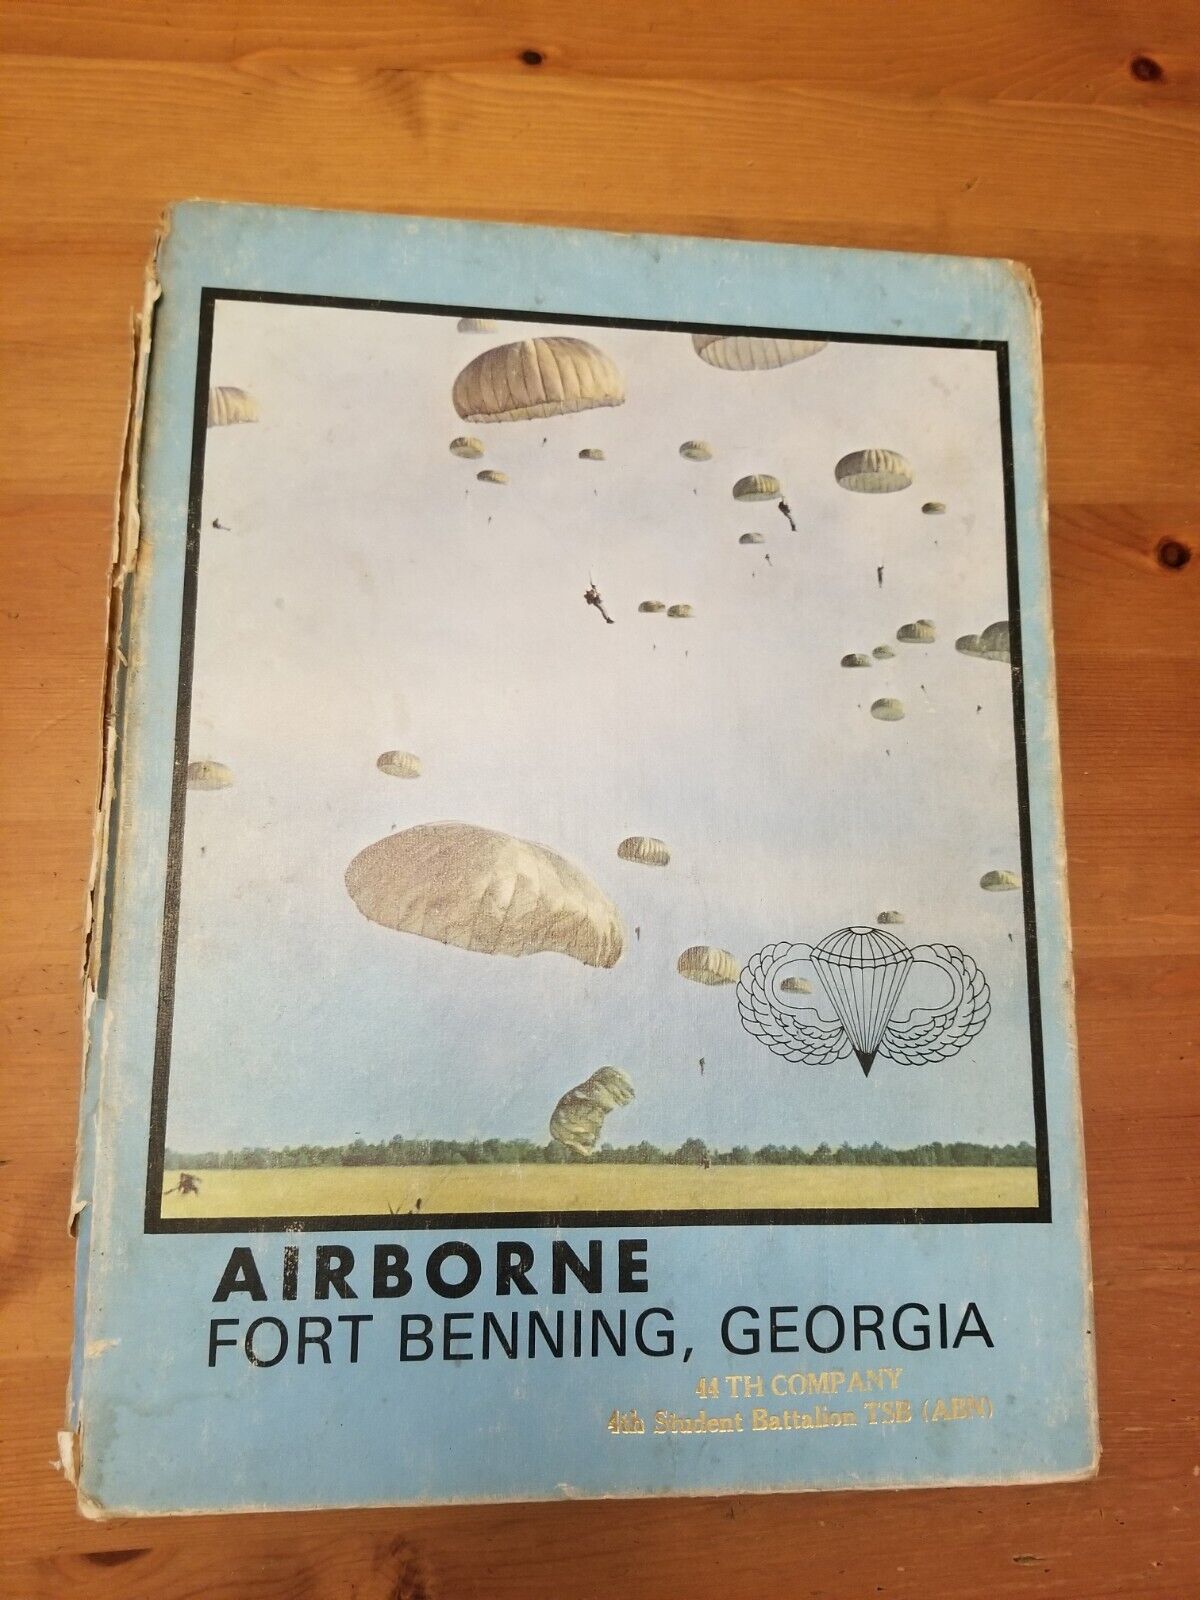 44th company airborne ranger training yearbook fort benning georgia